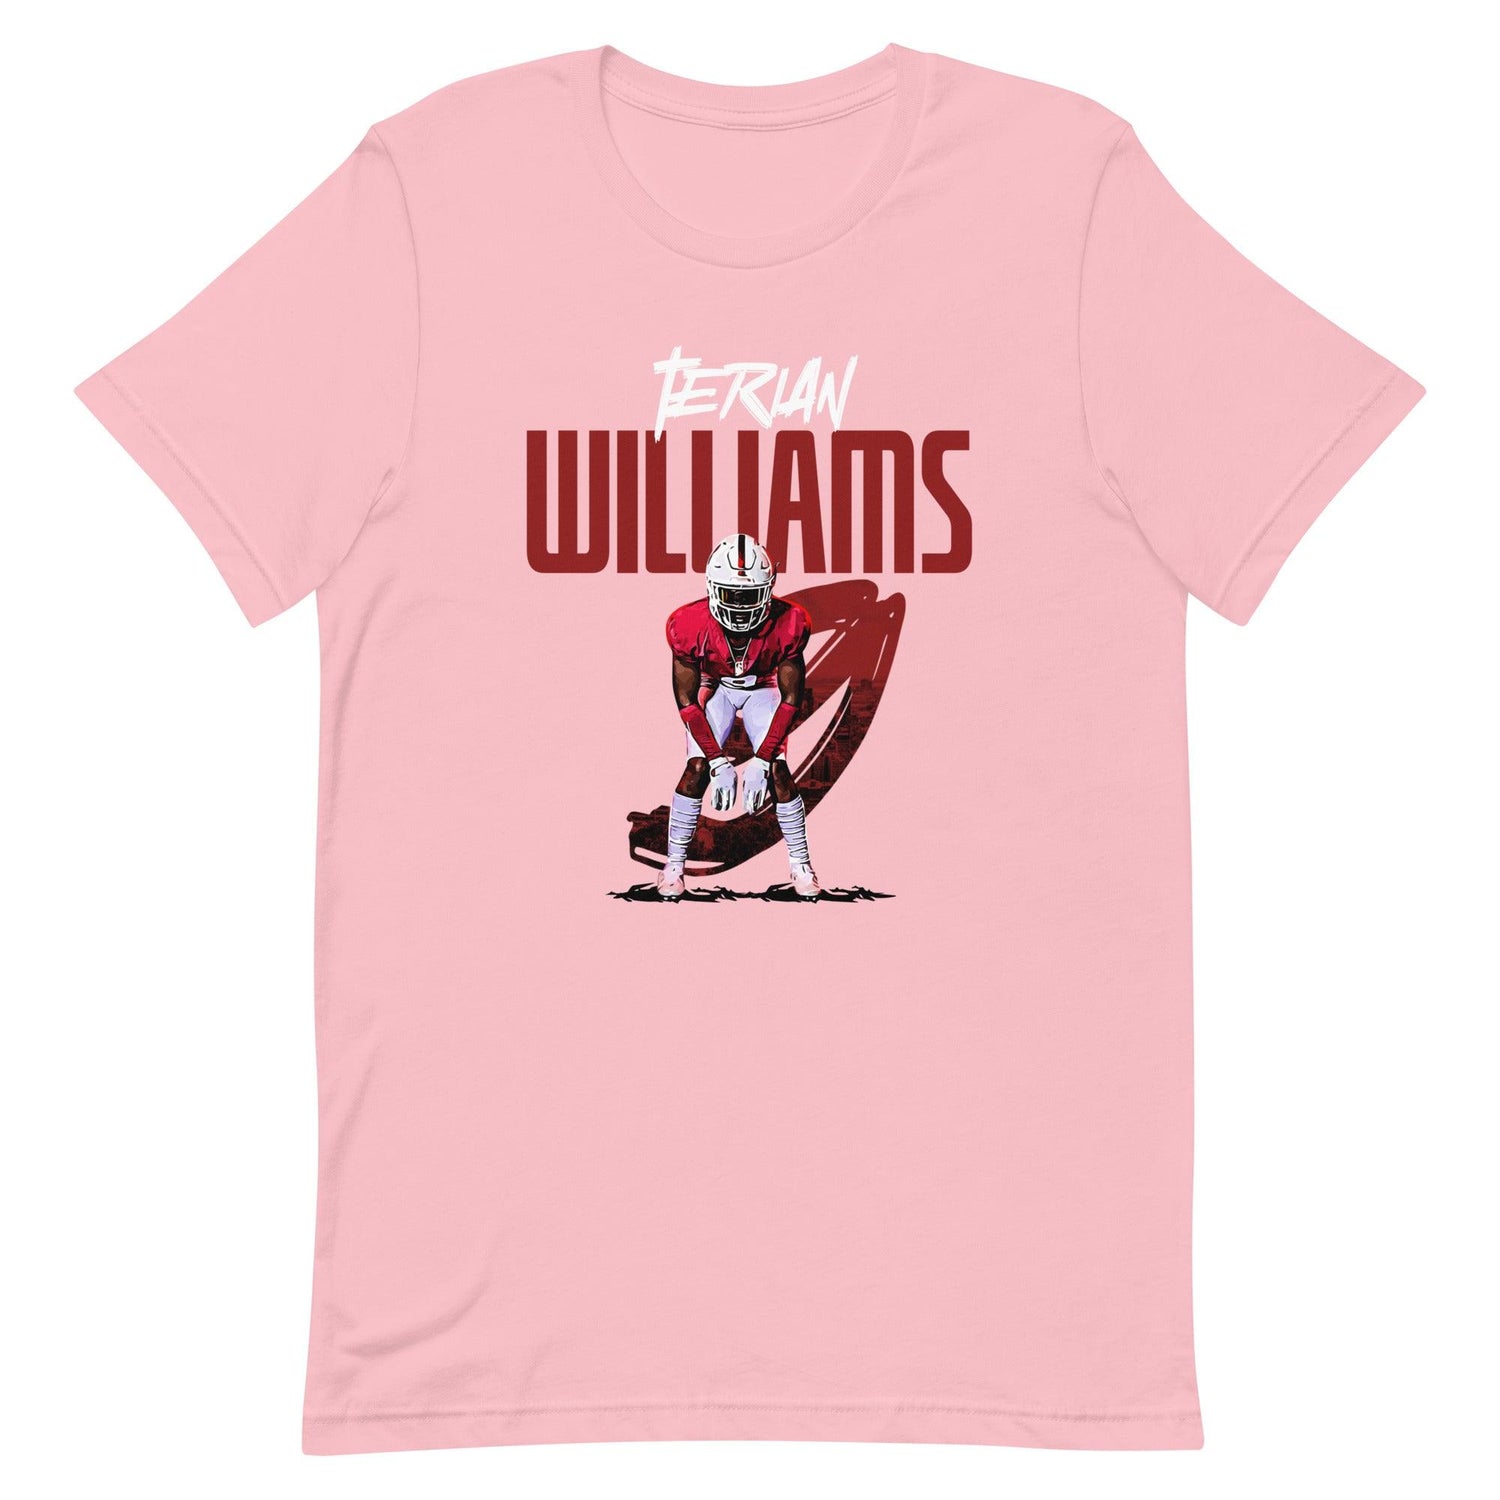 Terian Williams "Gameday" t-shirt - Fan Arch